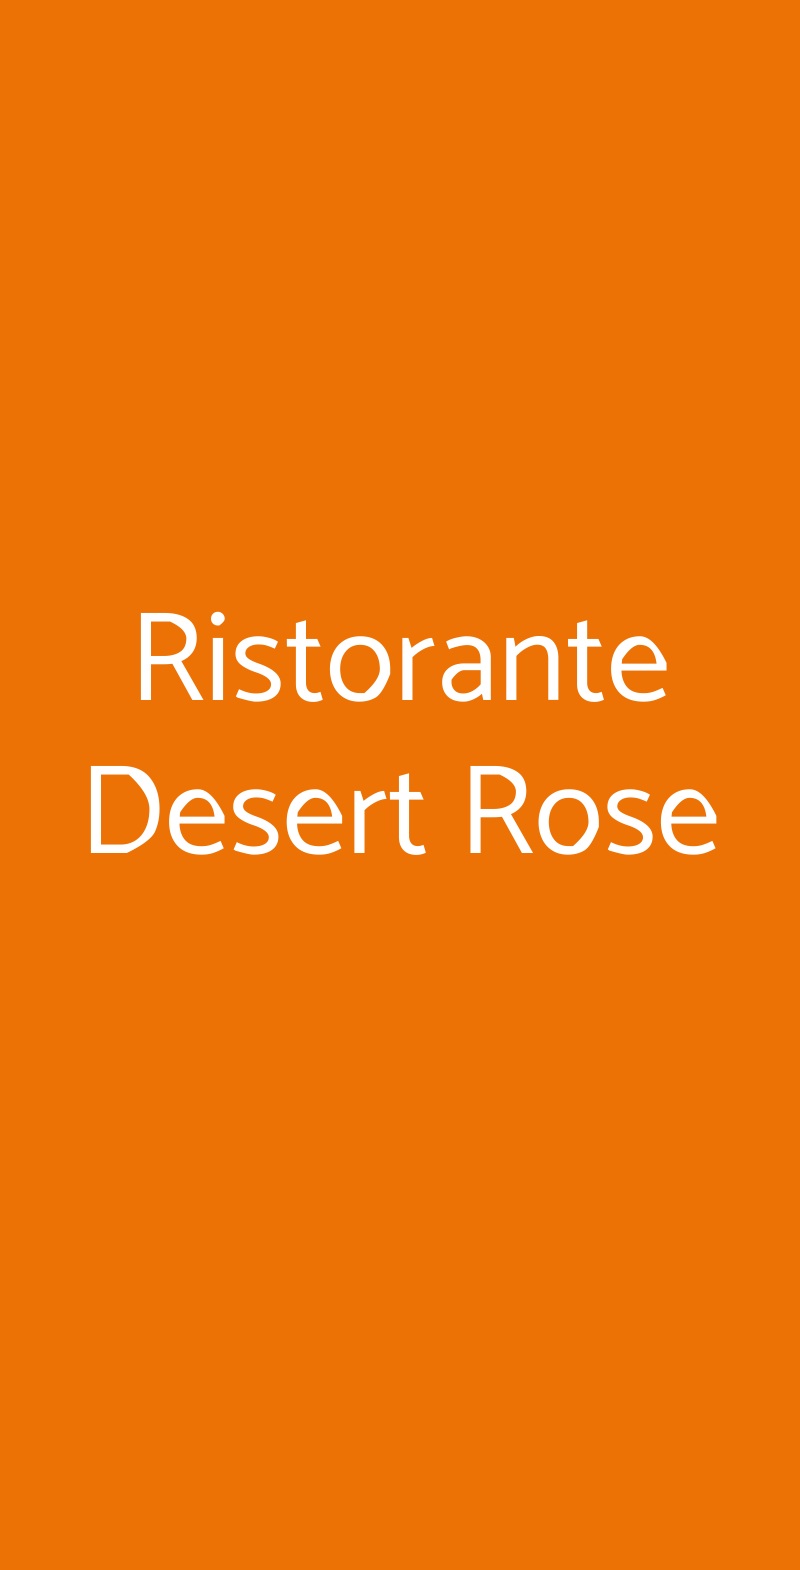 Ristorante Desert Rose Milano menù 1 pagina